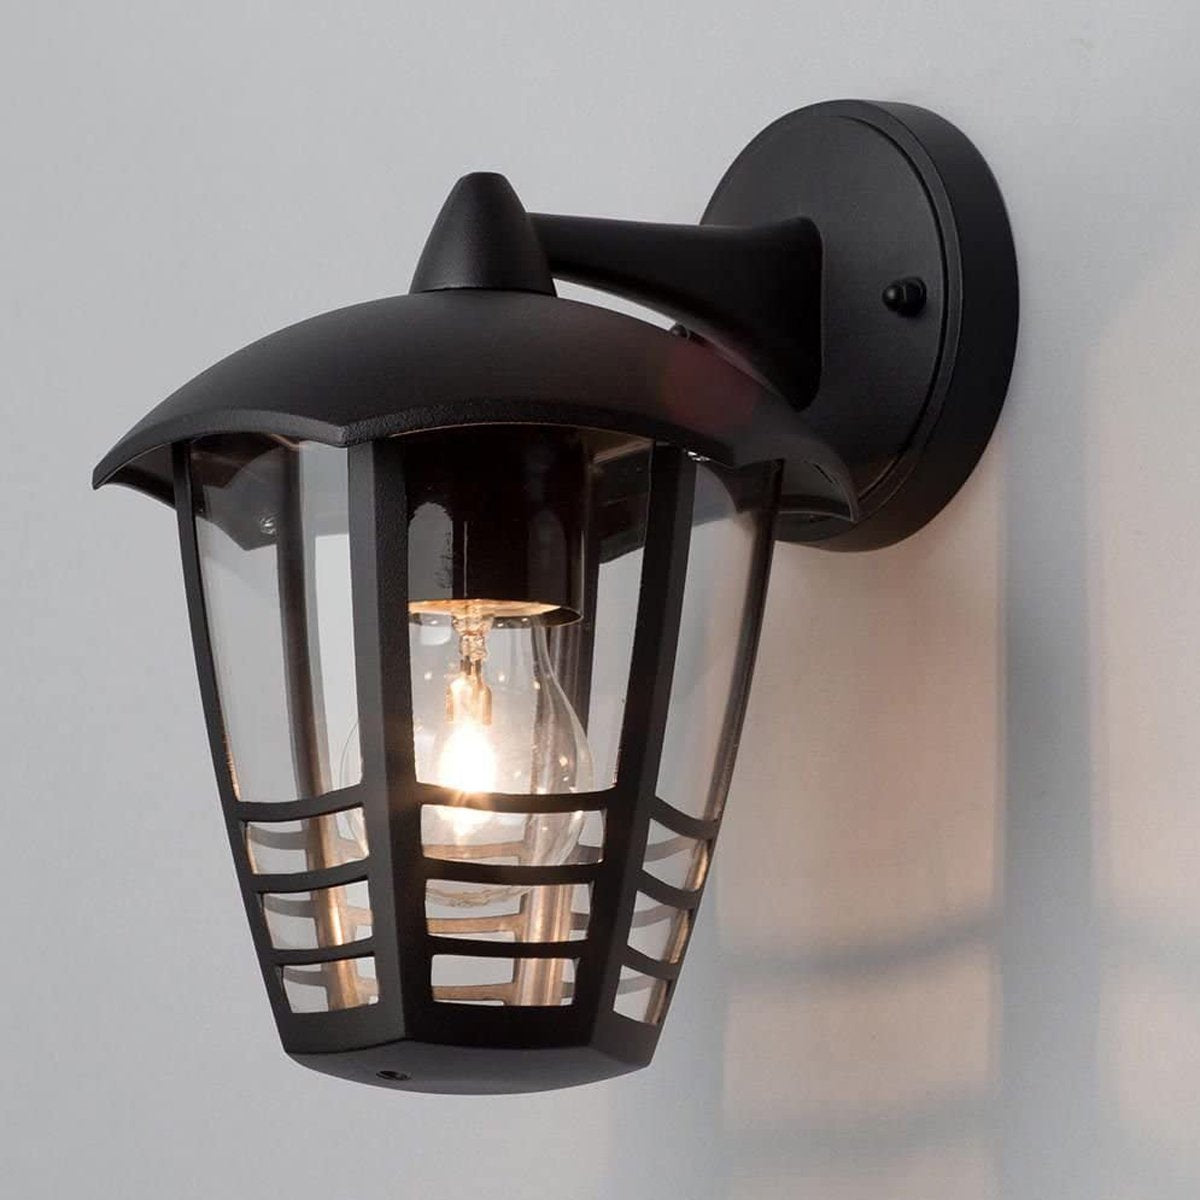 CGC IMOGEN Black Outdoor Hanging Lantern Light